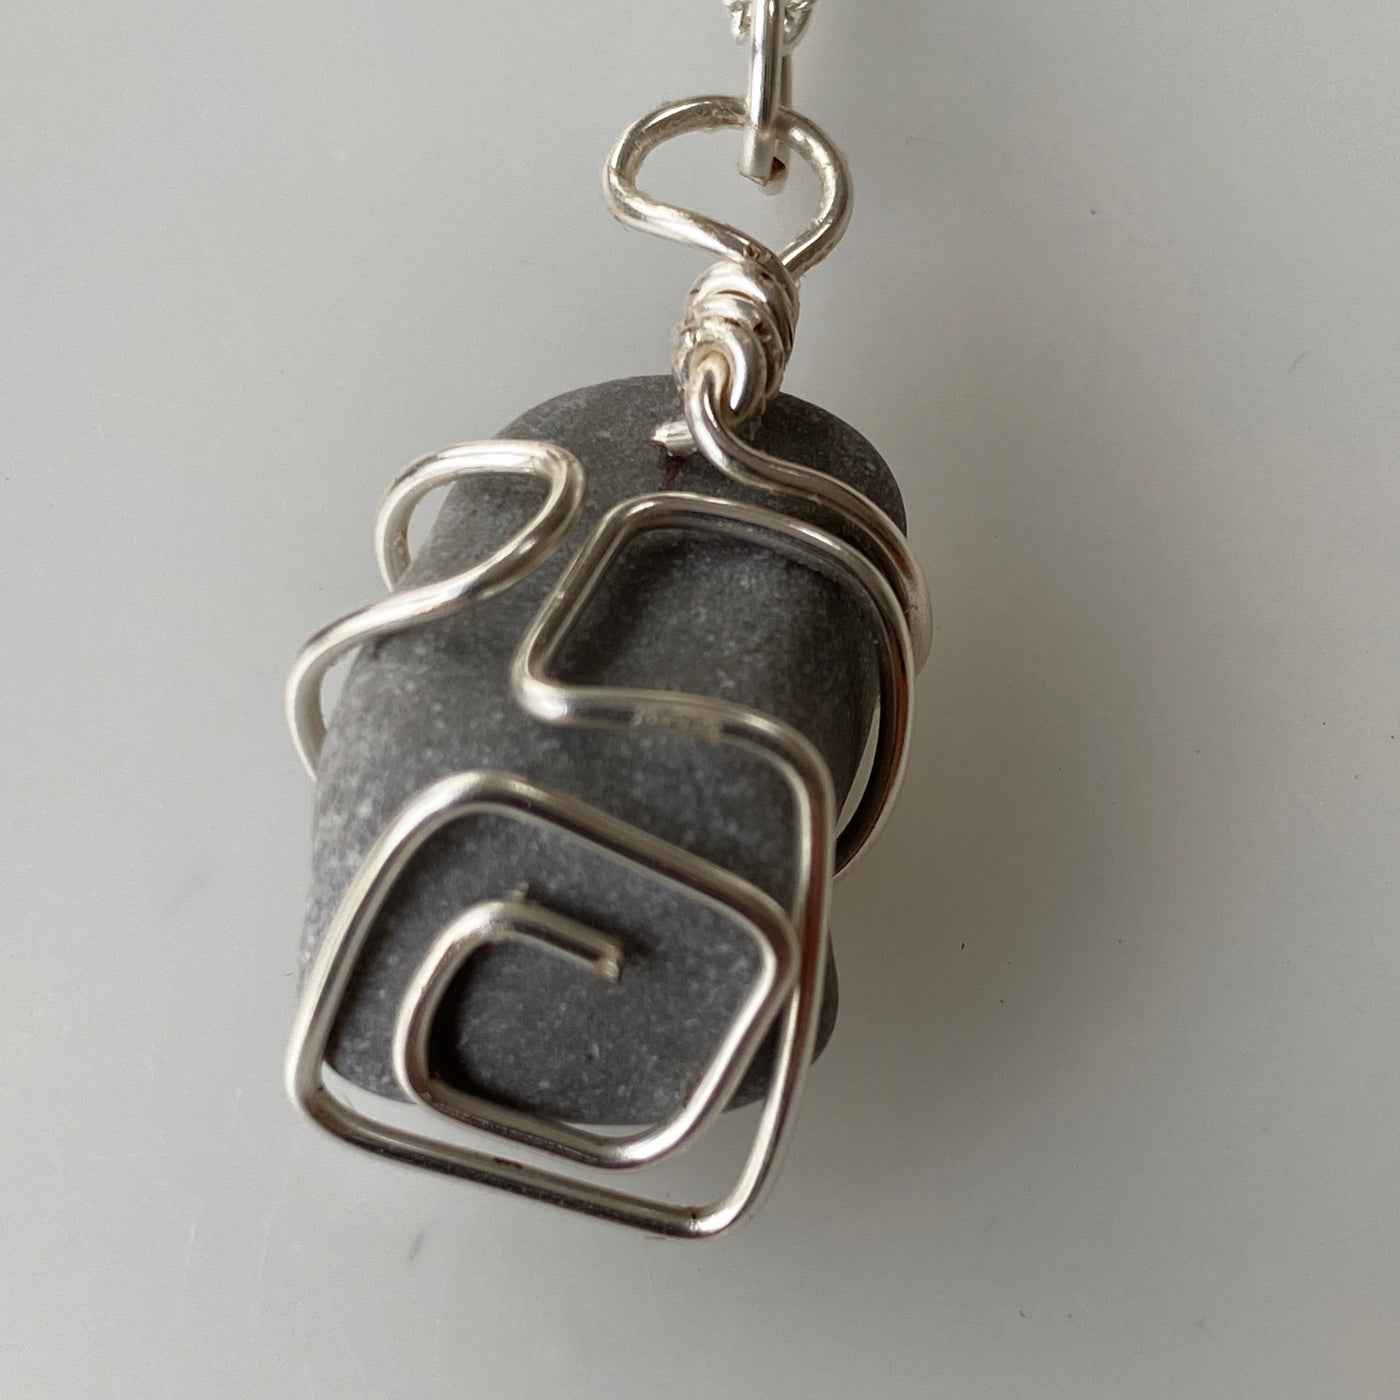 Small pendant for Elbastones. White natural stone and silver wire